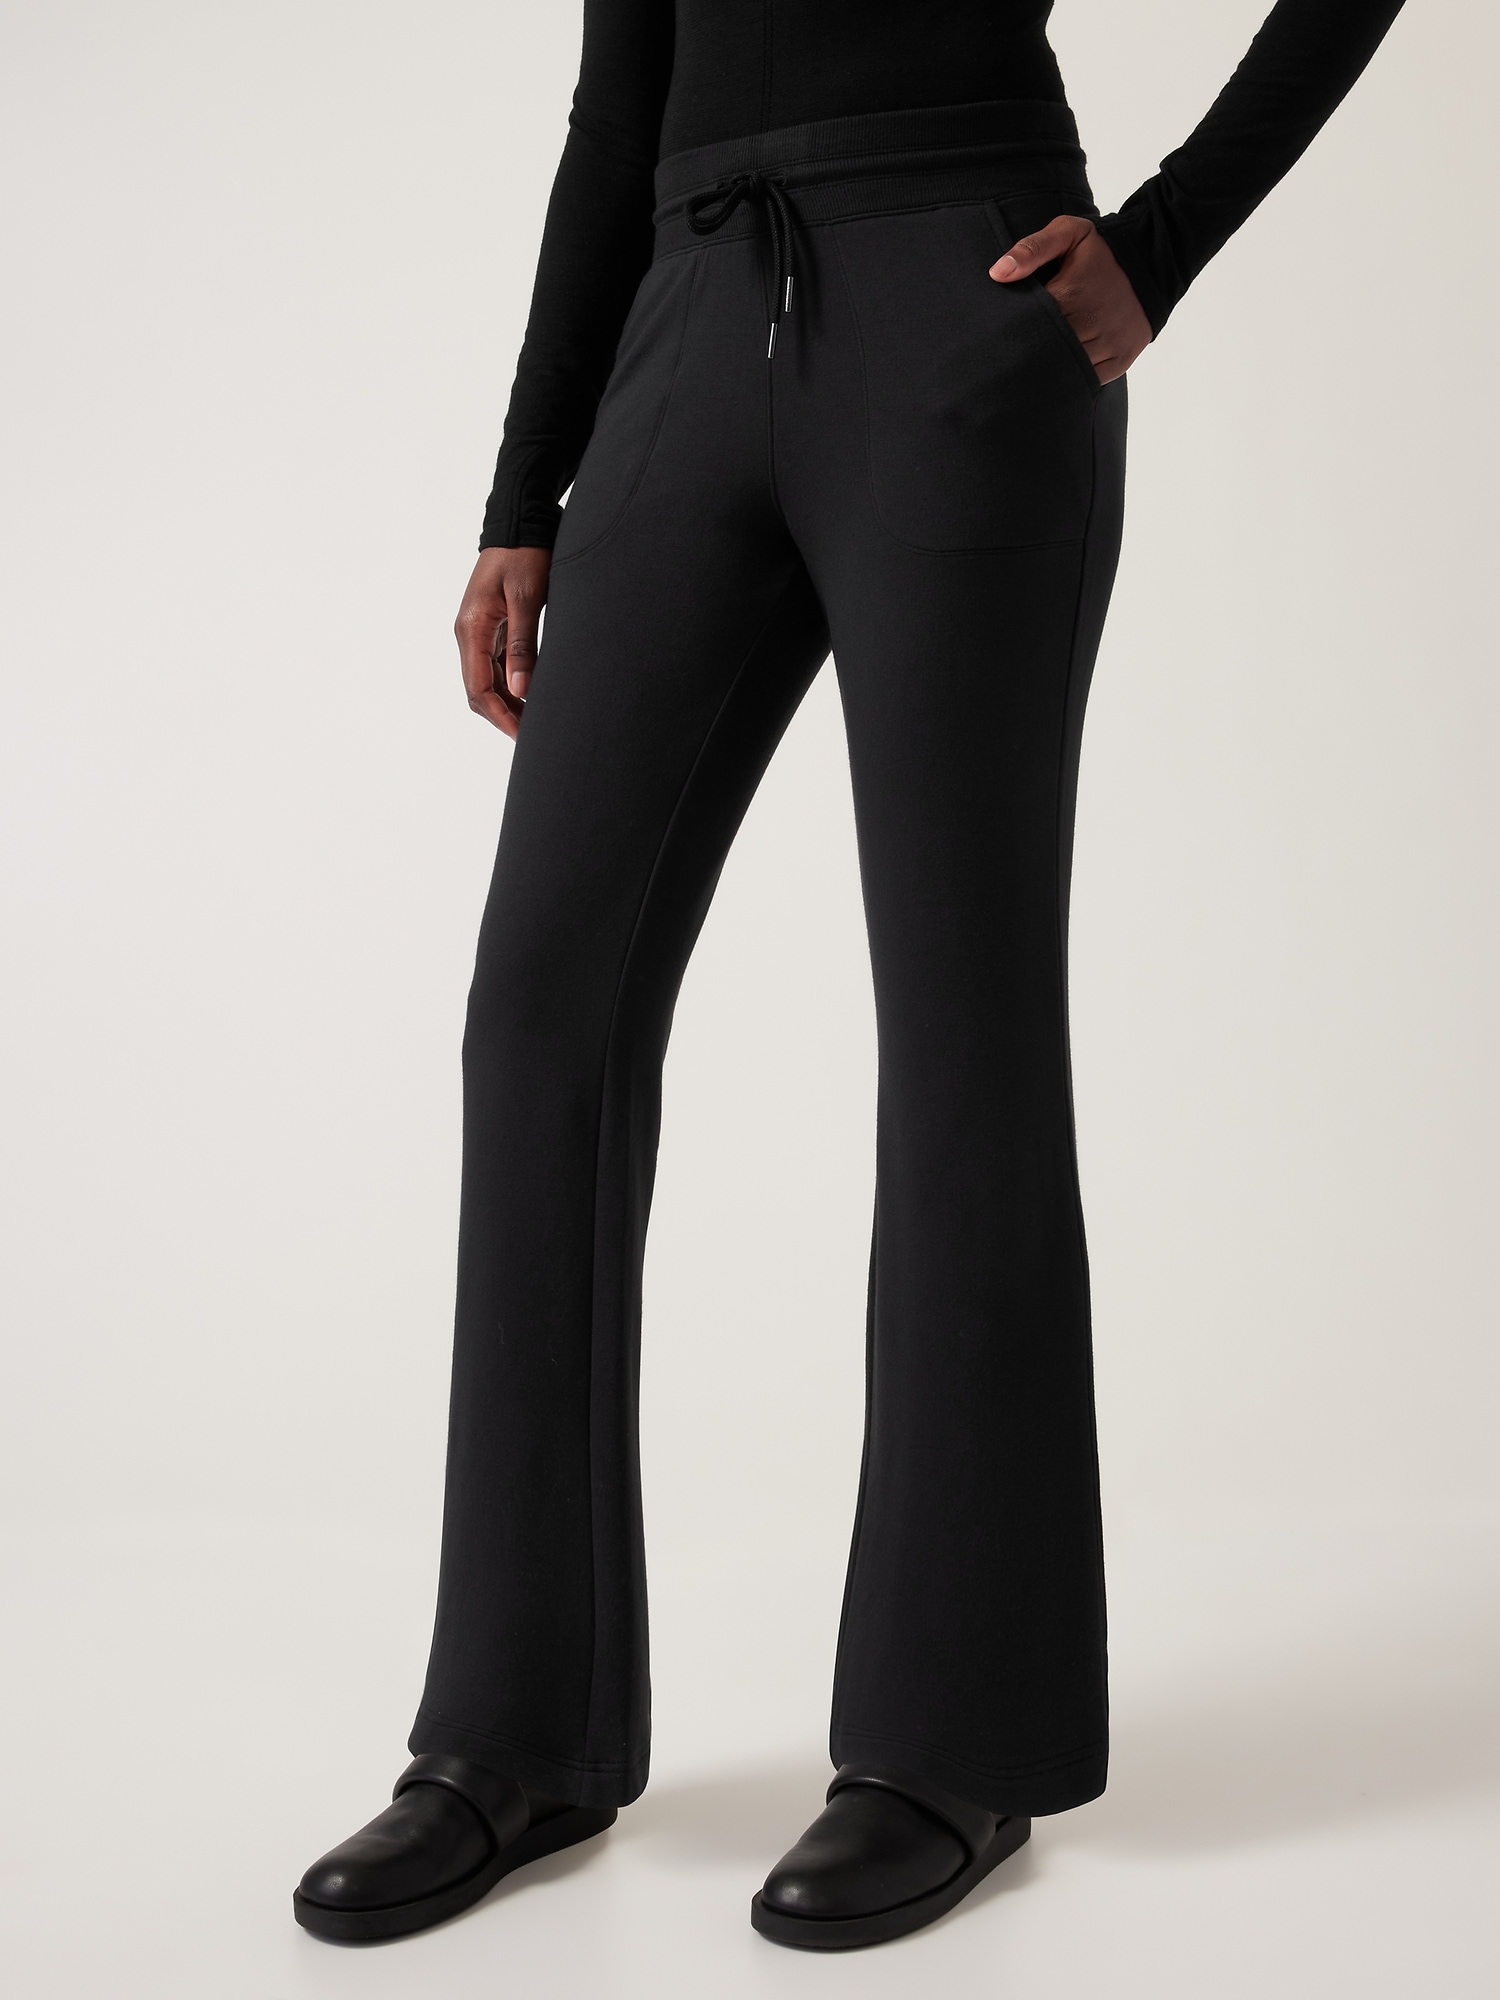 Athleta Elation Women's Flare Pants -Black, Size Large/Tall